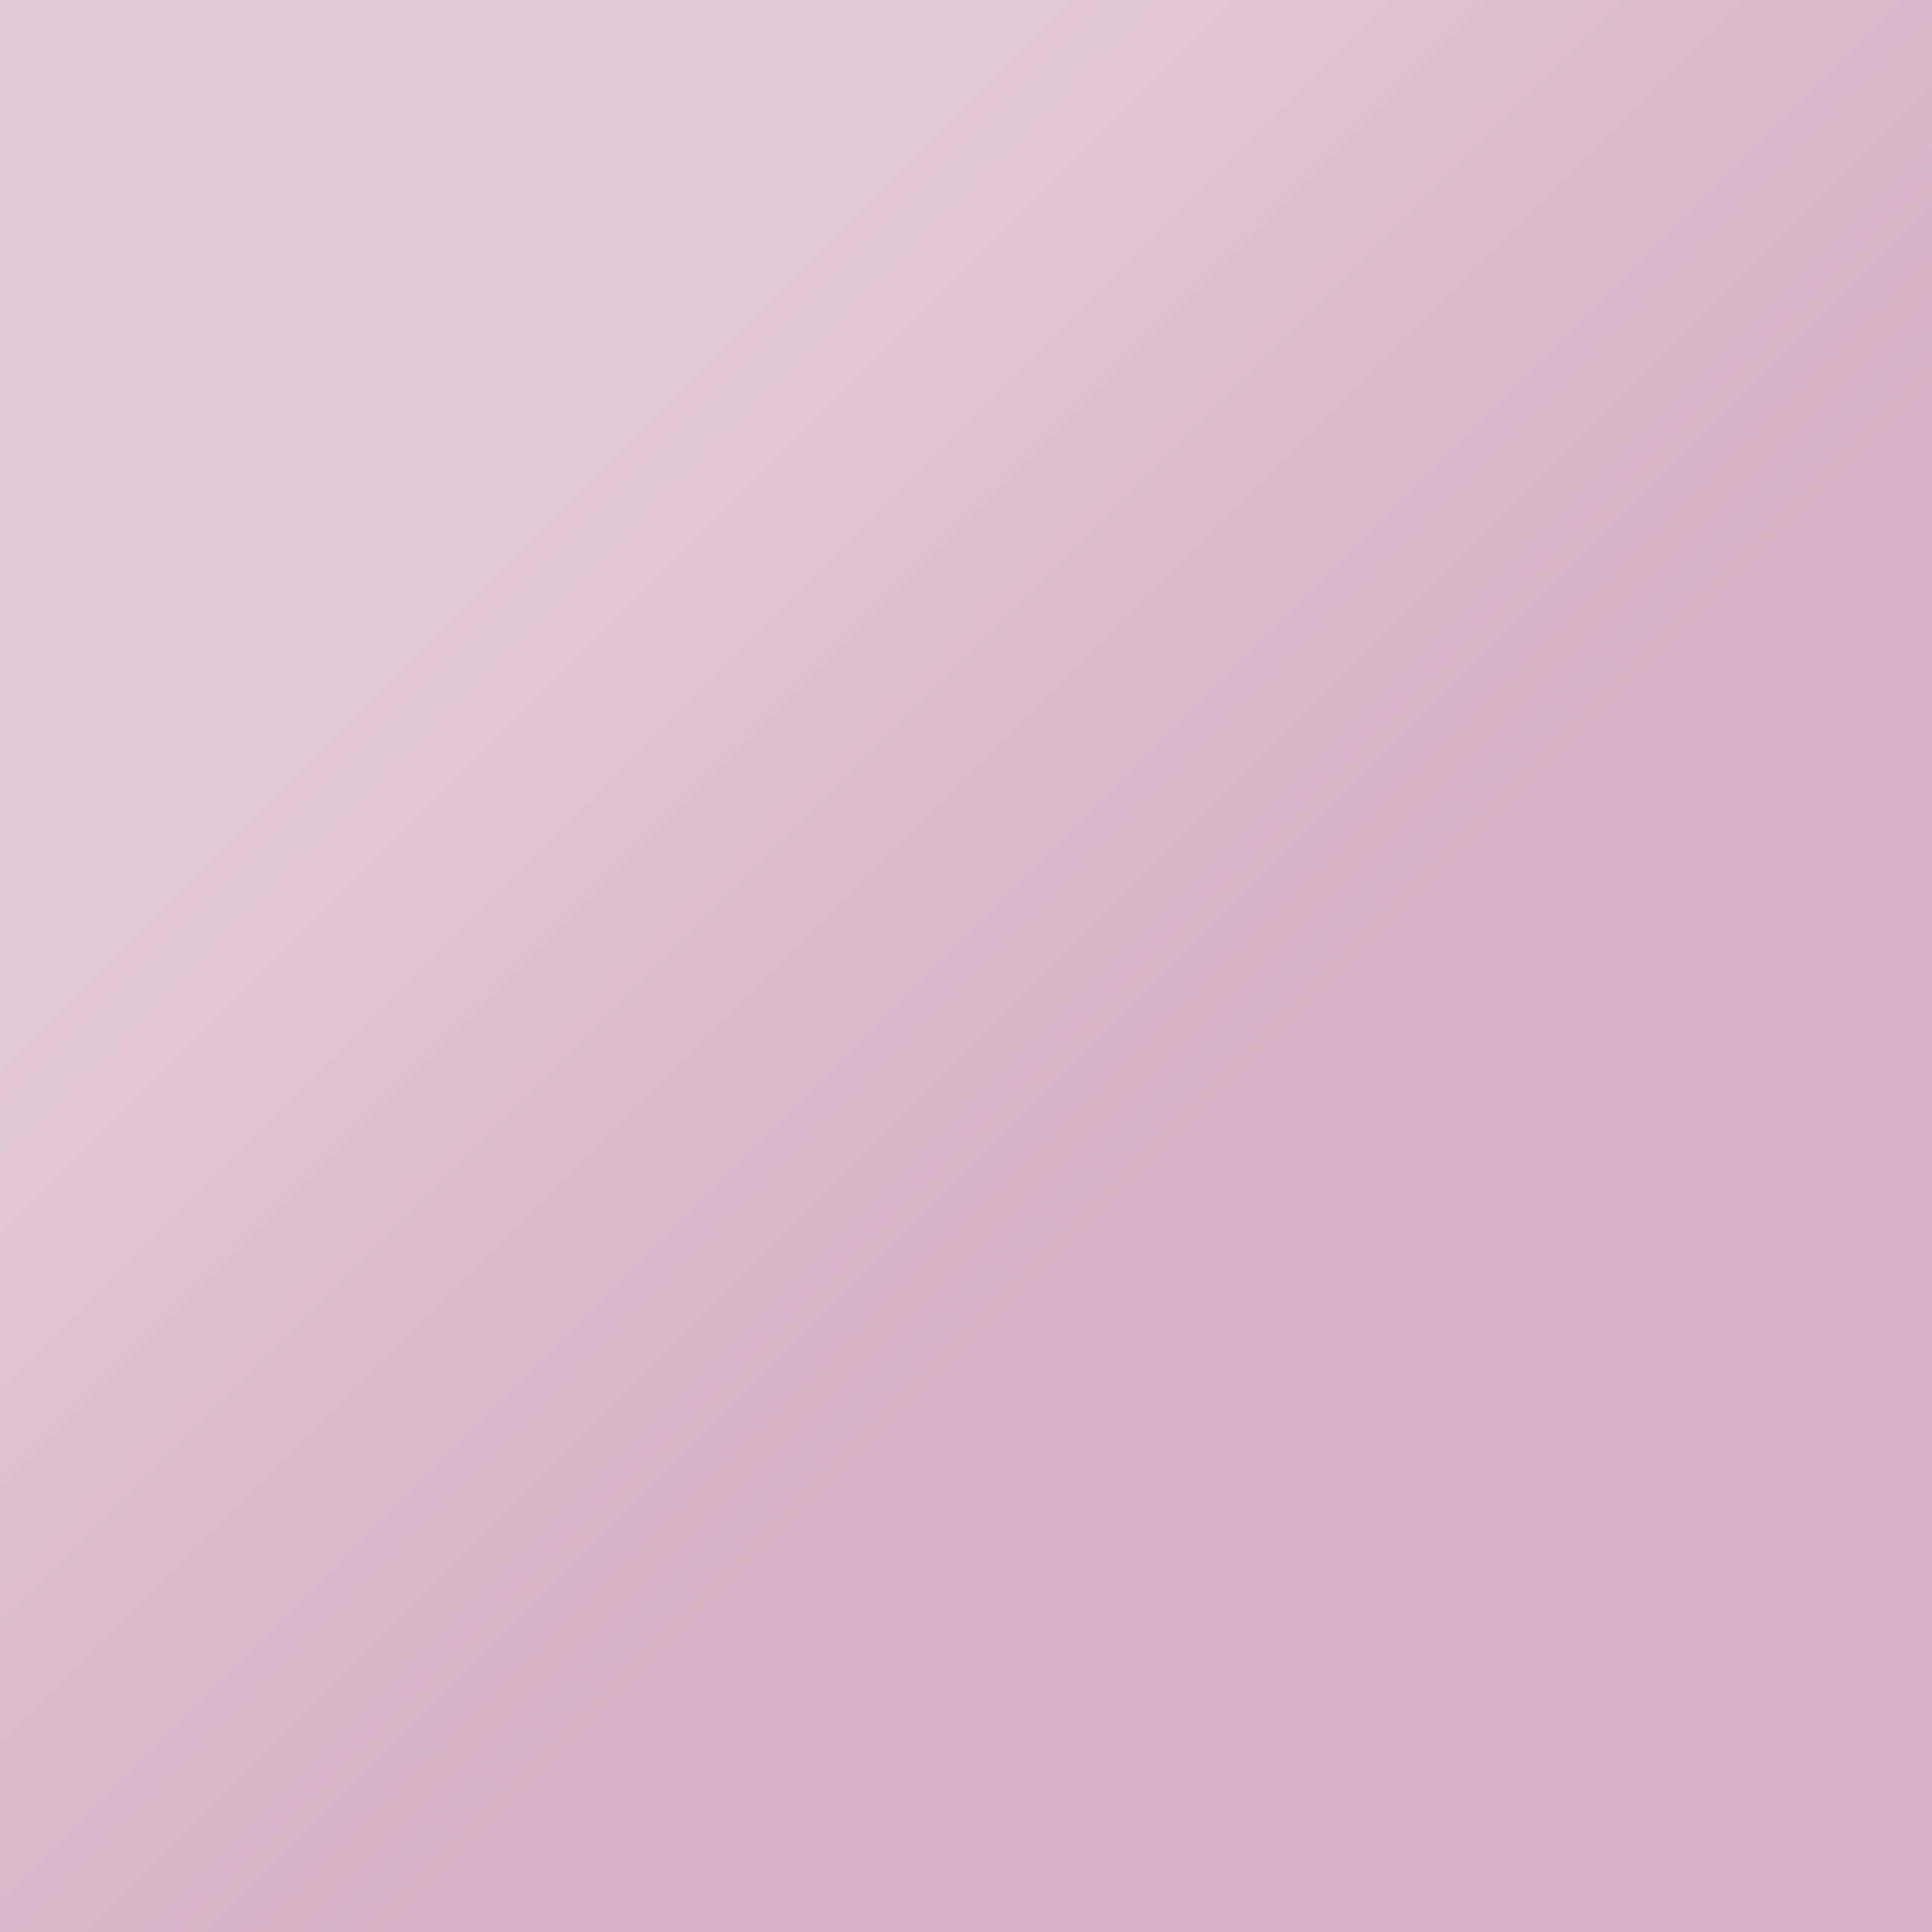 Lee® Discolicht, 002 Farbfolie 50 x 122cm rose pink - Farbfolie